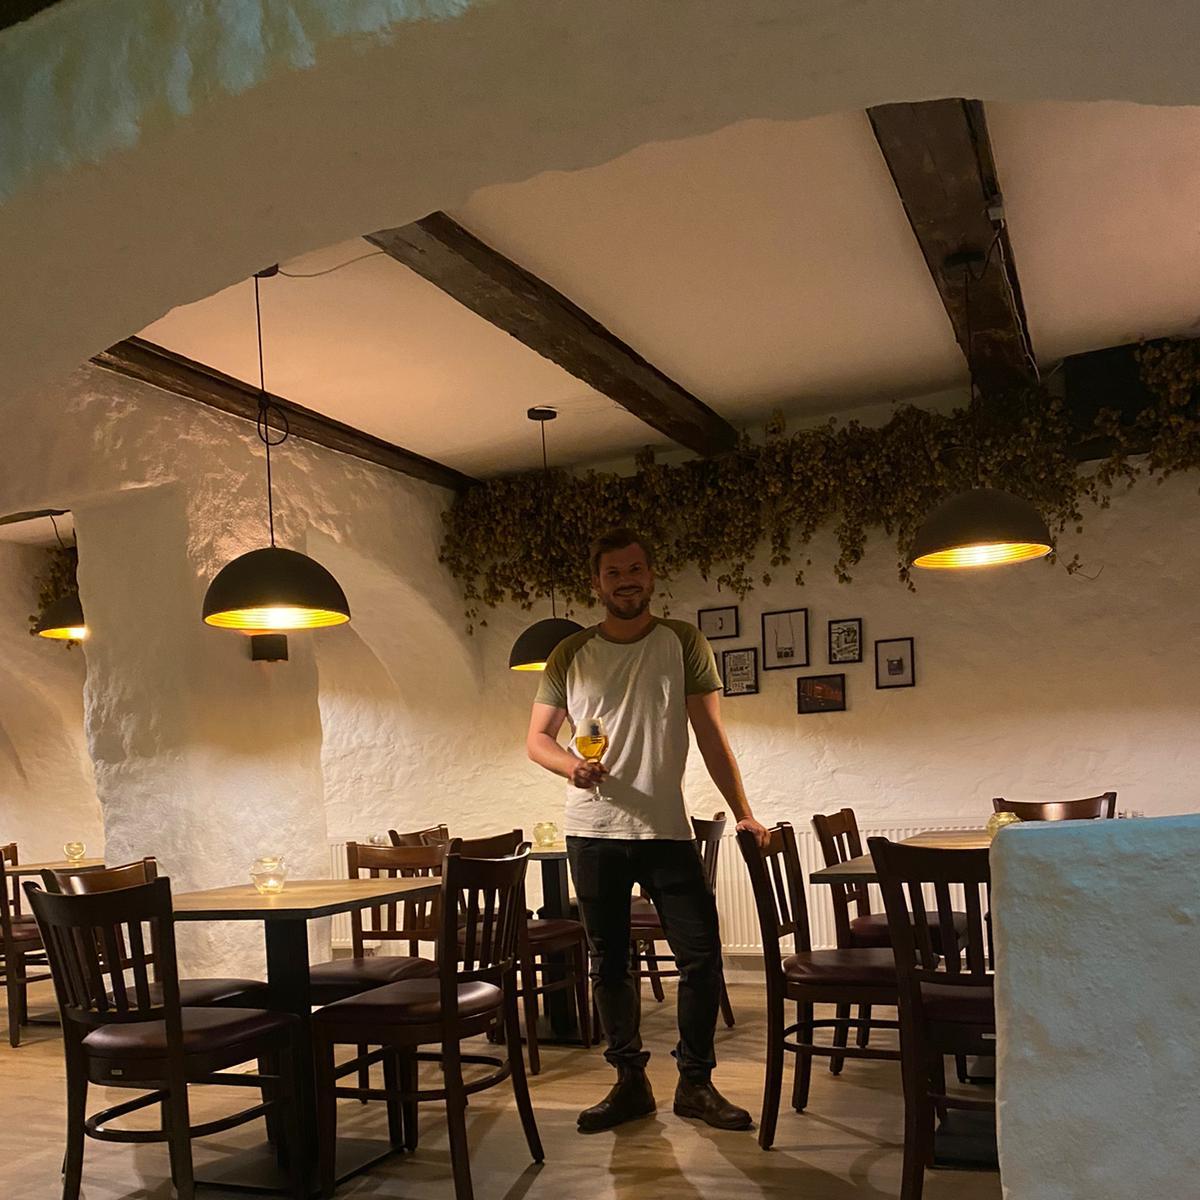 Restaurant "Bar Schlossleitn" in Miesbach